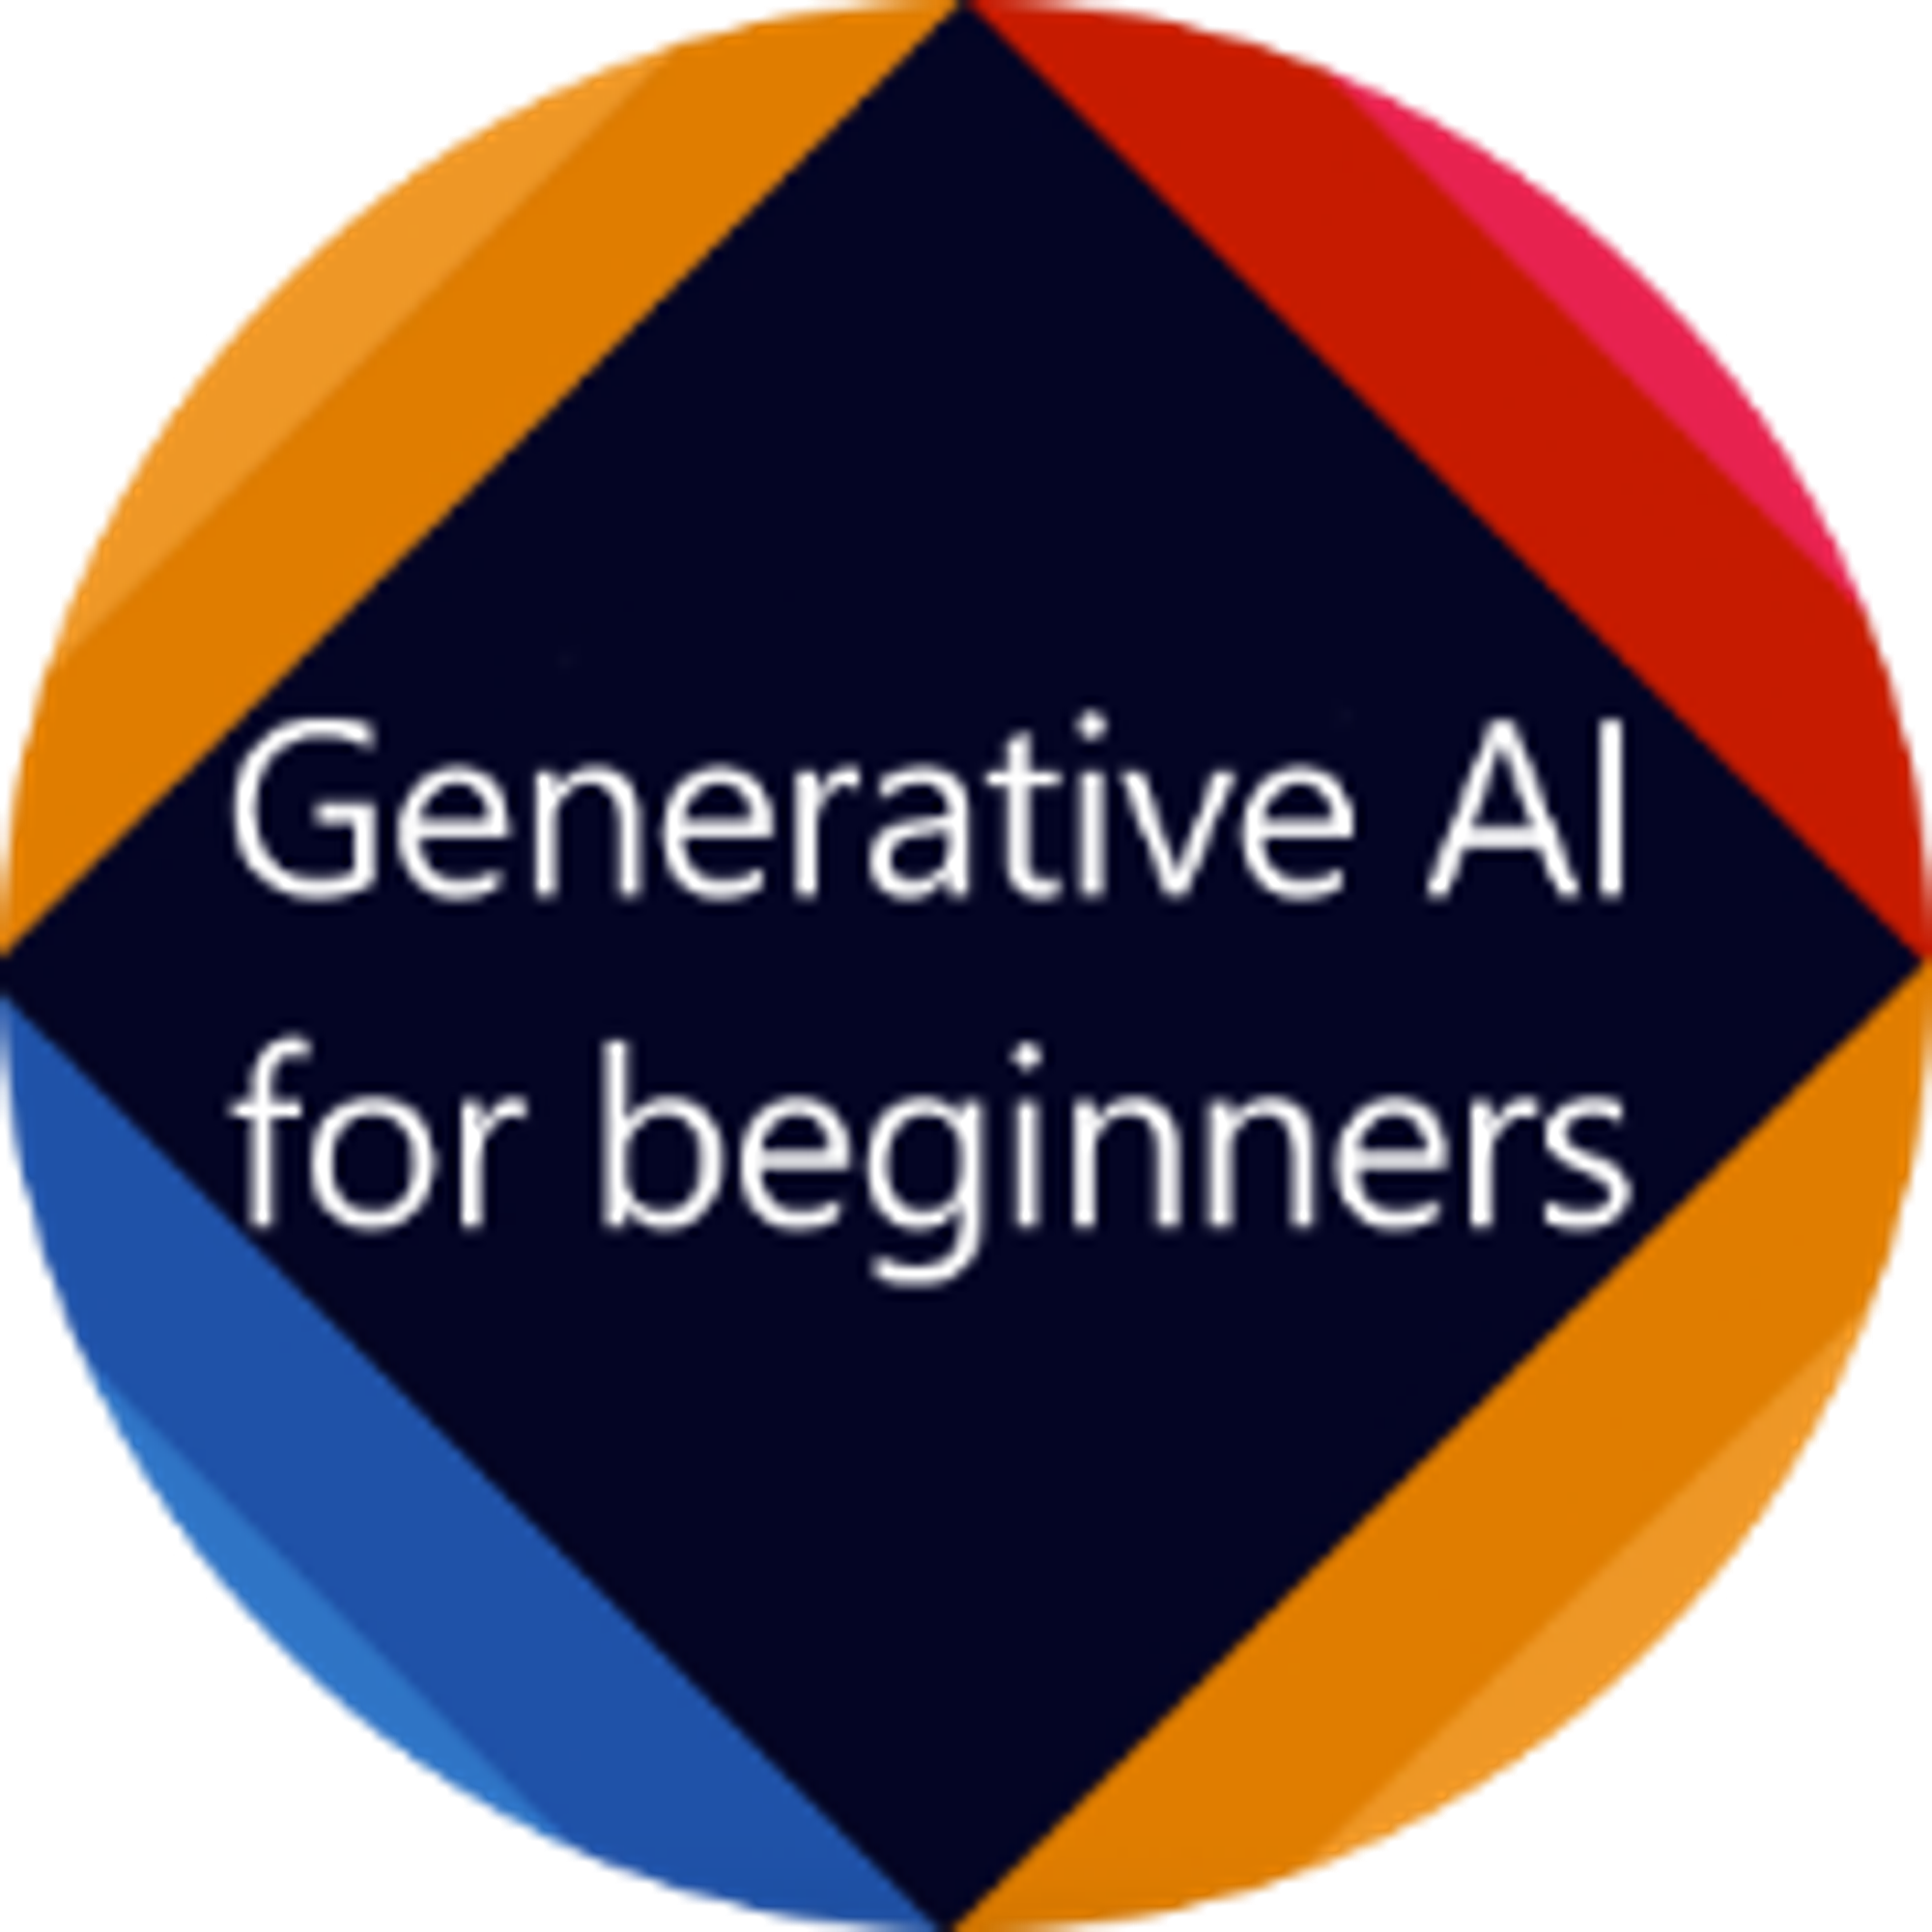 Generative AI for Beginners